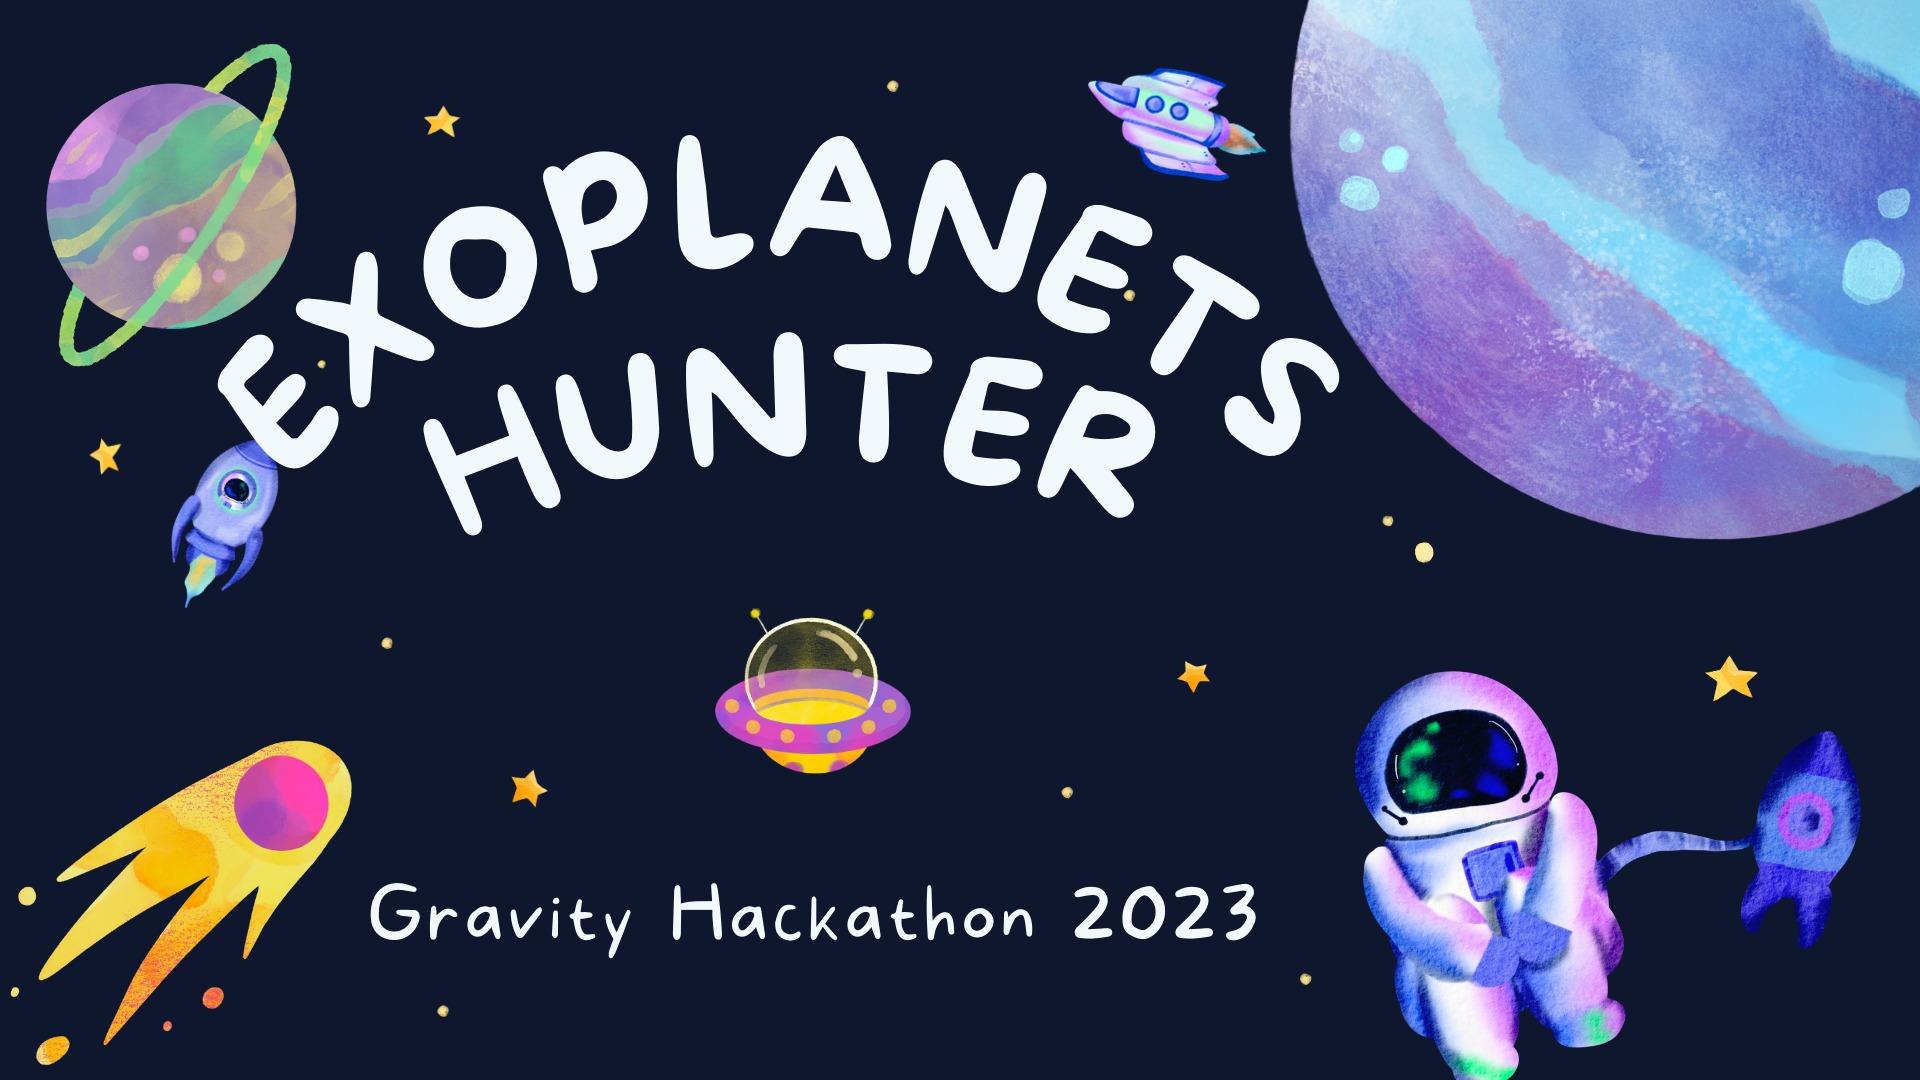 Exoplanet Hunters